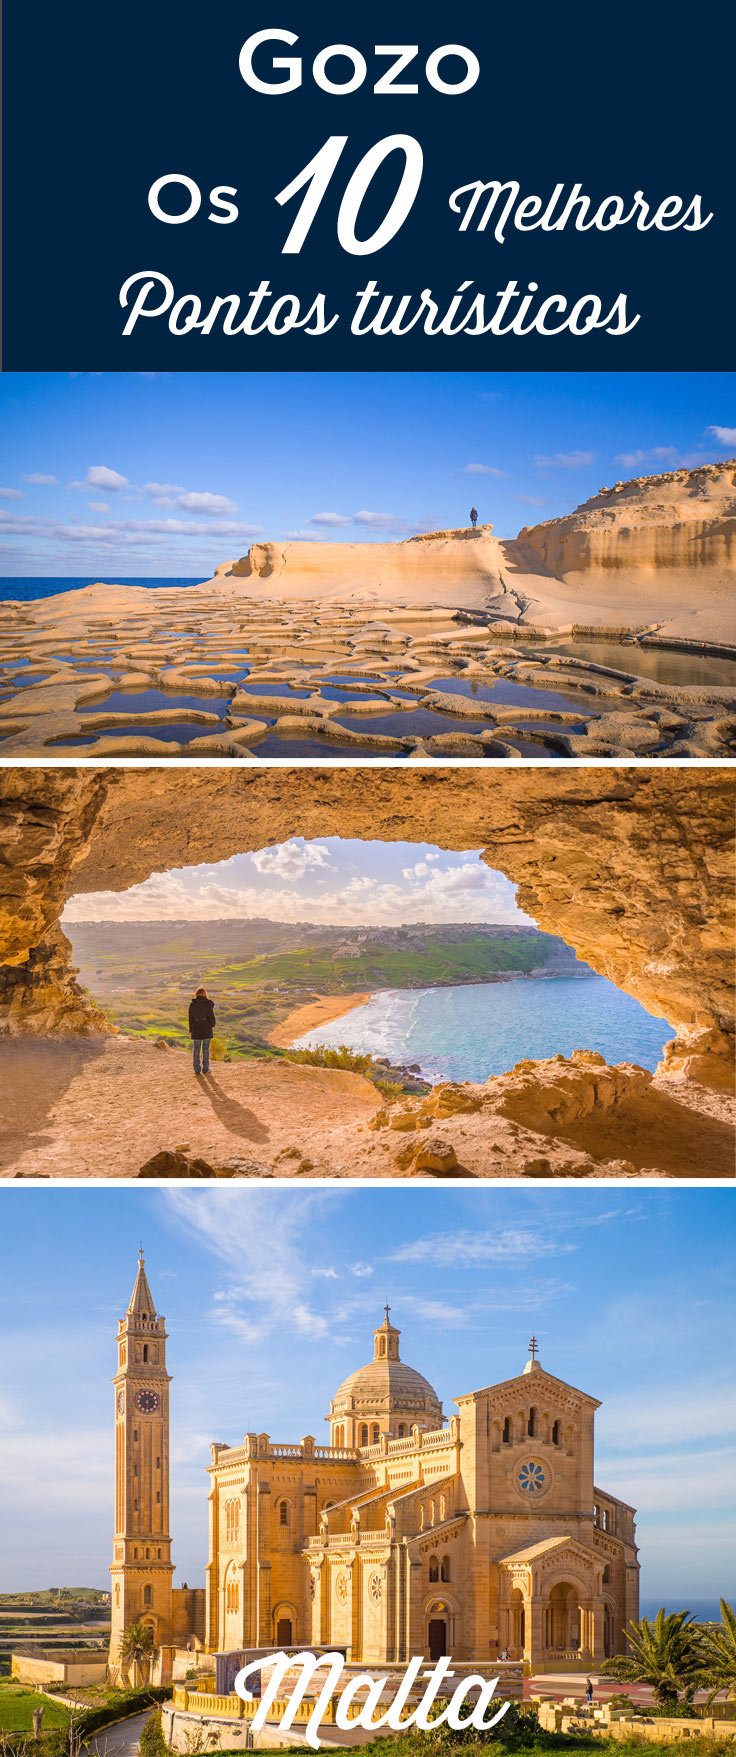 Gozo pontos turisticos